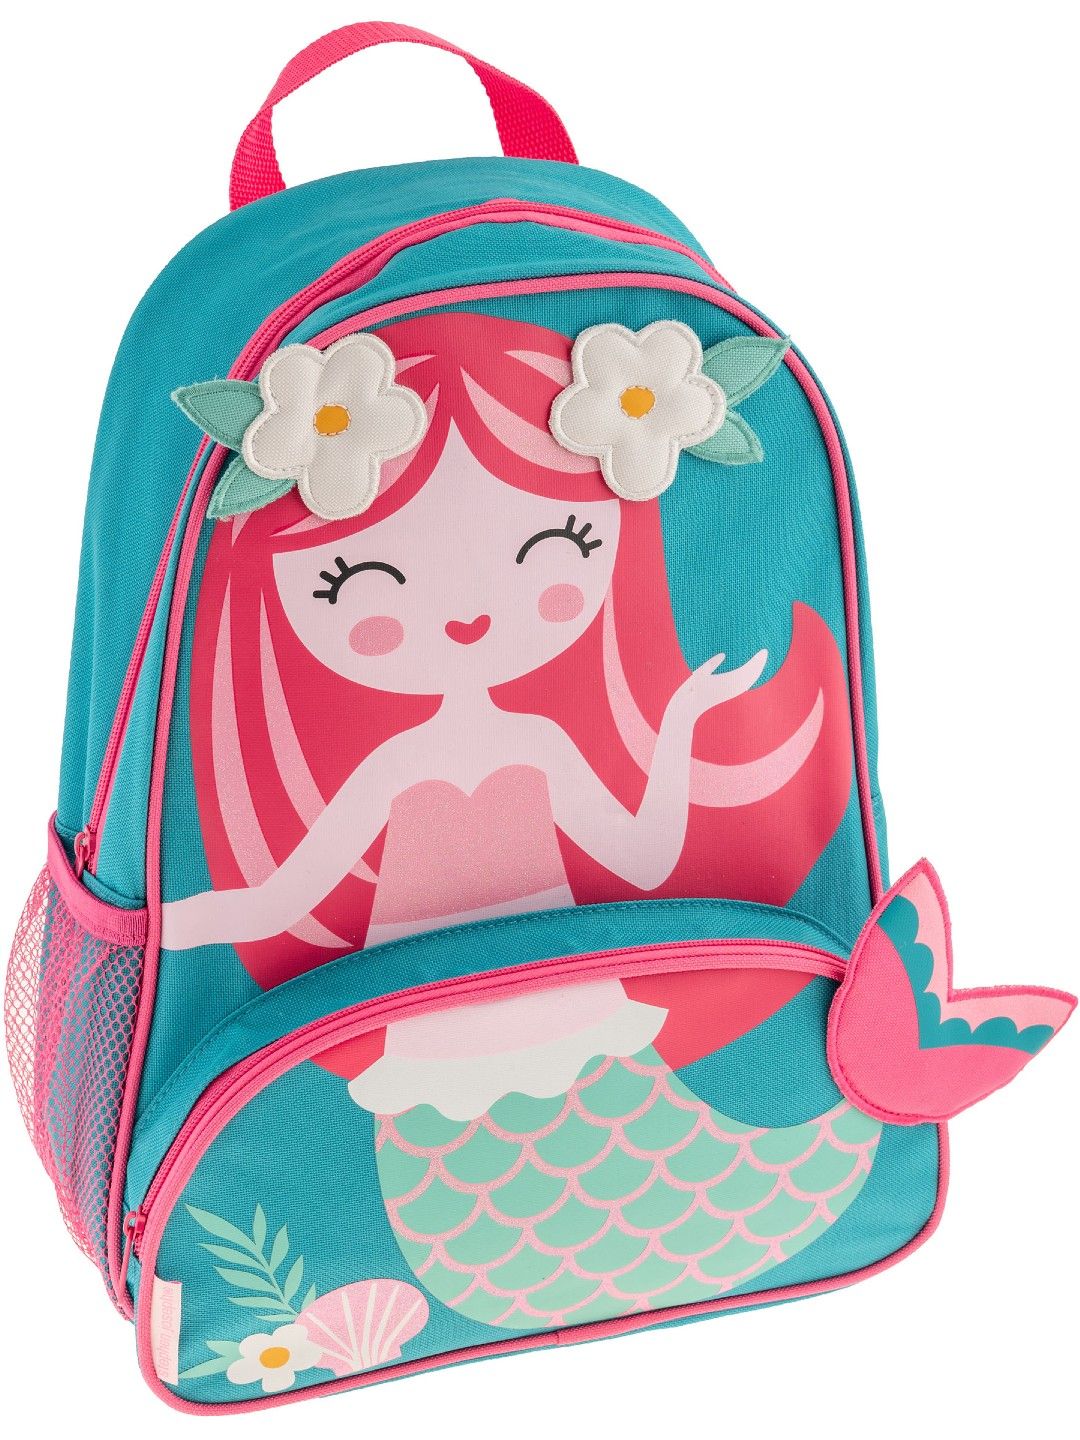 Stephen Joseph Mermaid Sidekick School Backpack